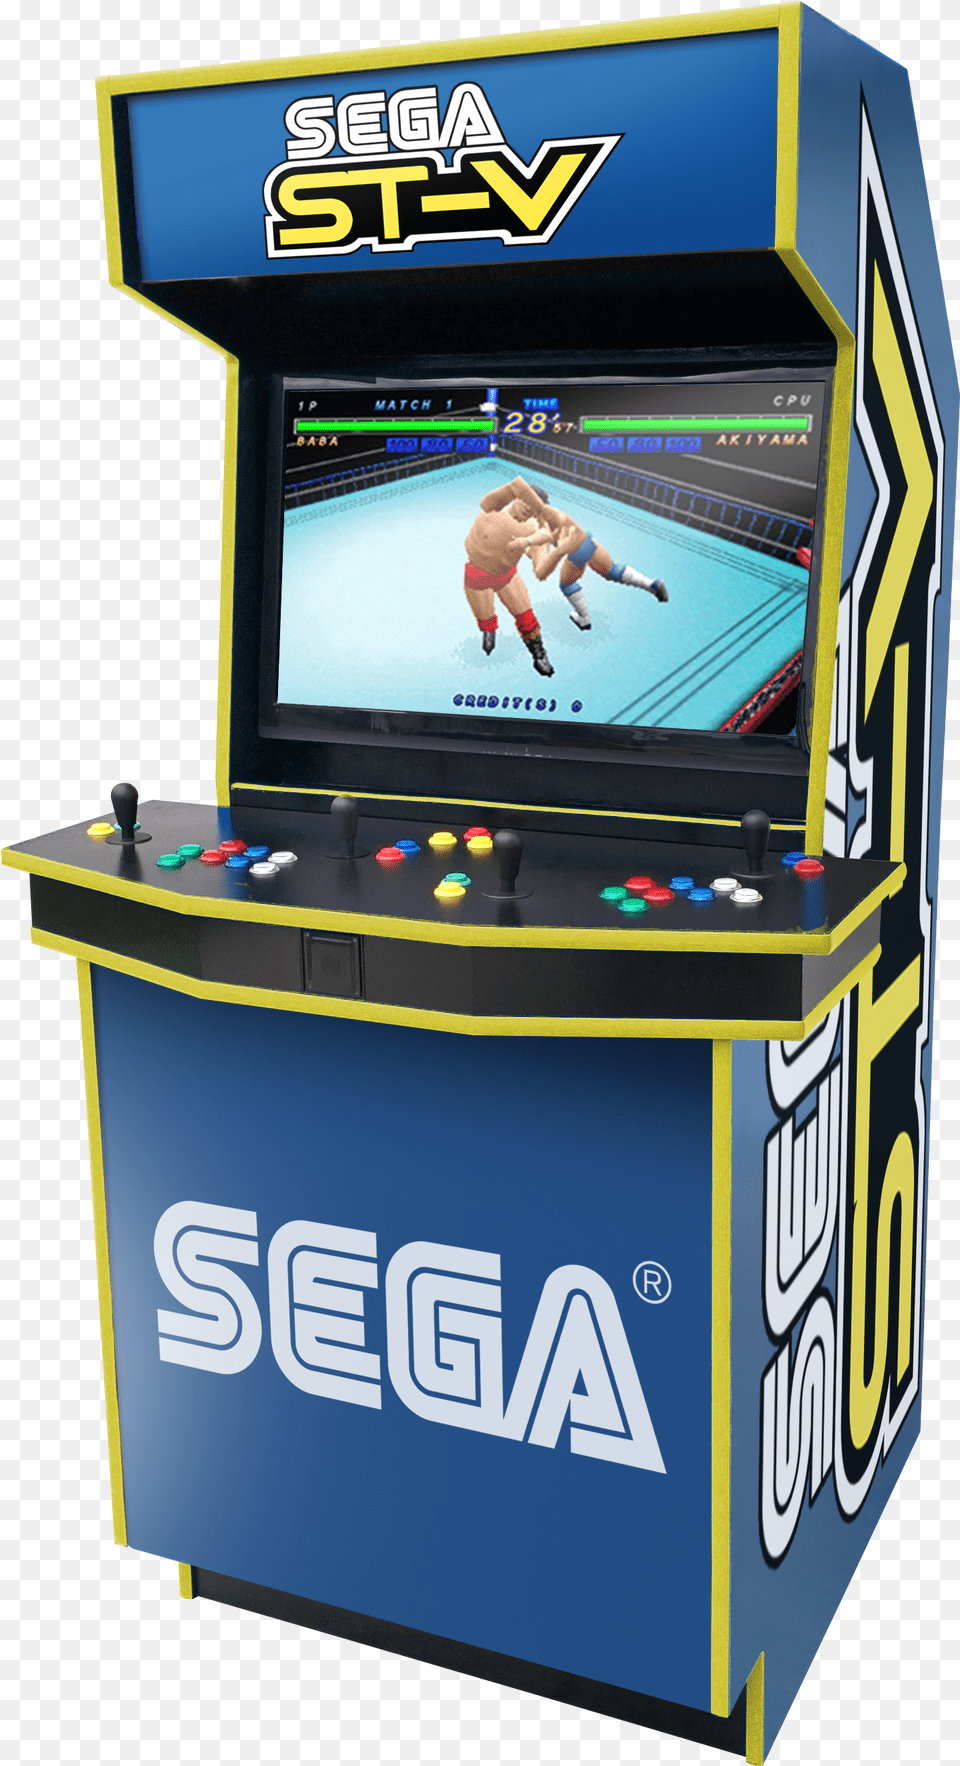 Sega St V Arcade Cabinet, Computer Hardware, Electronics, Hardware, Monitor Png